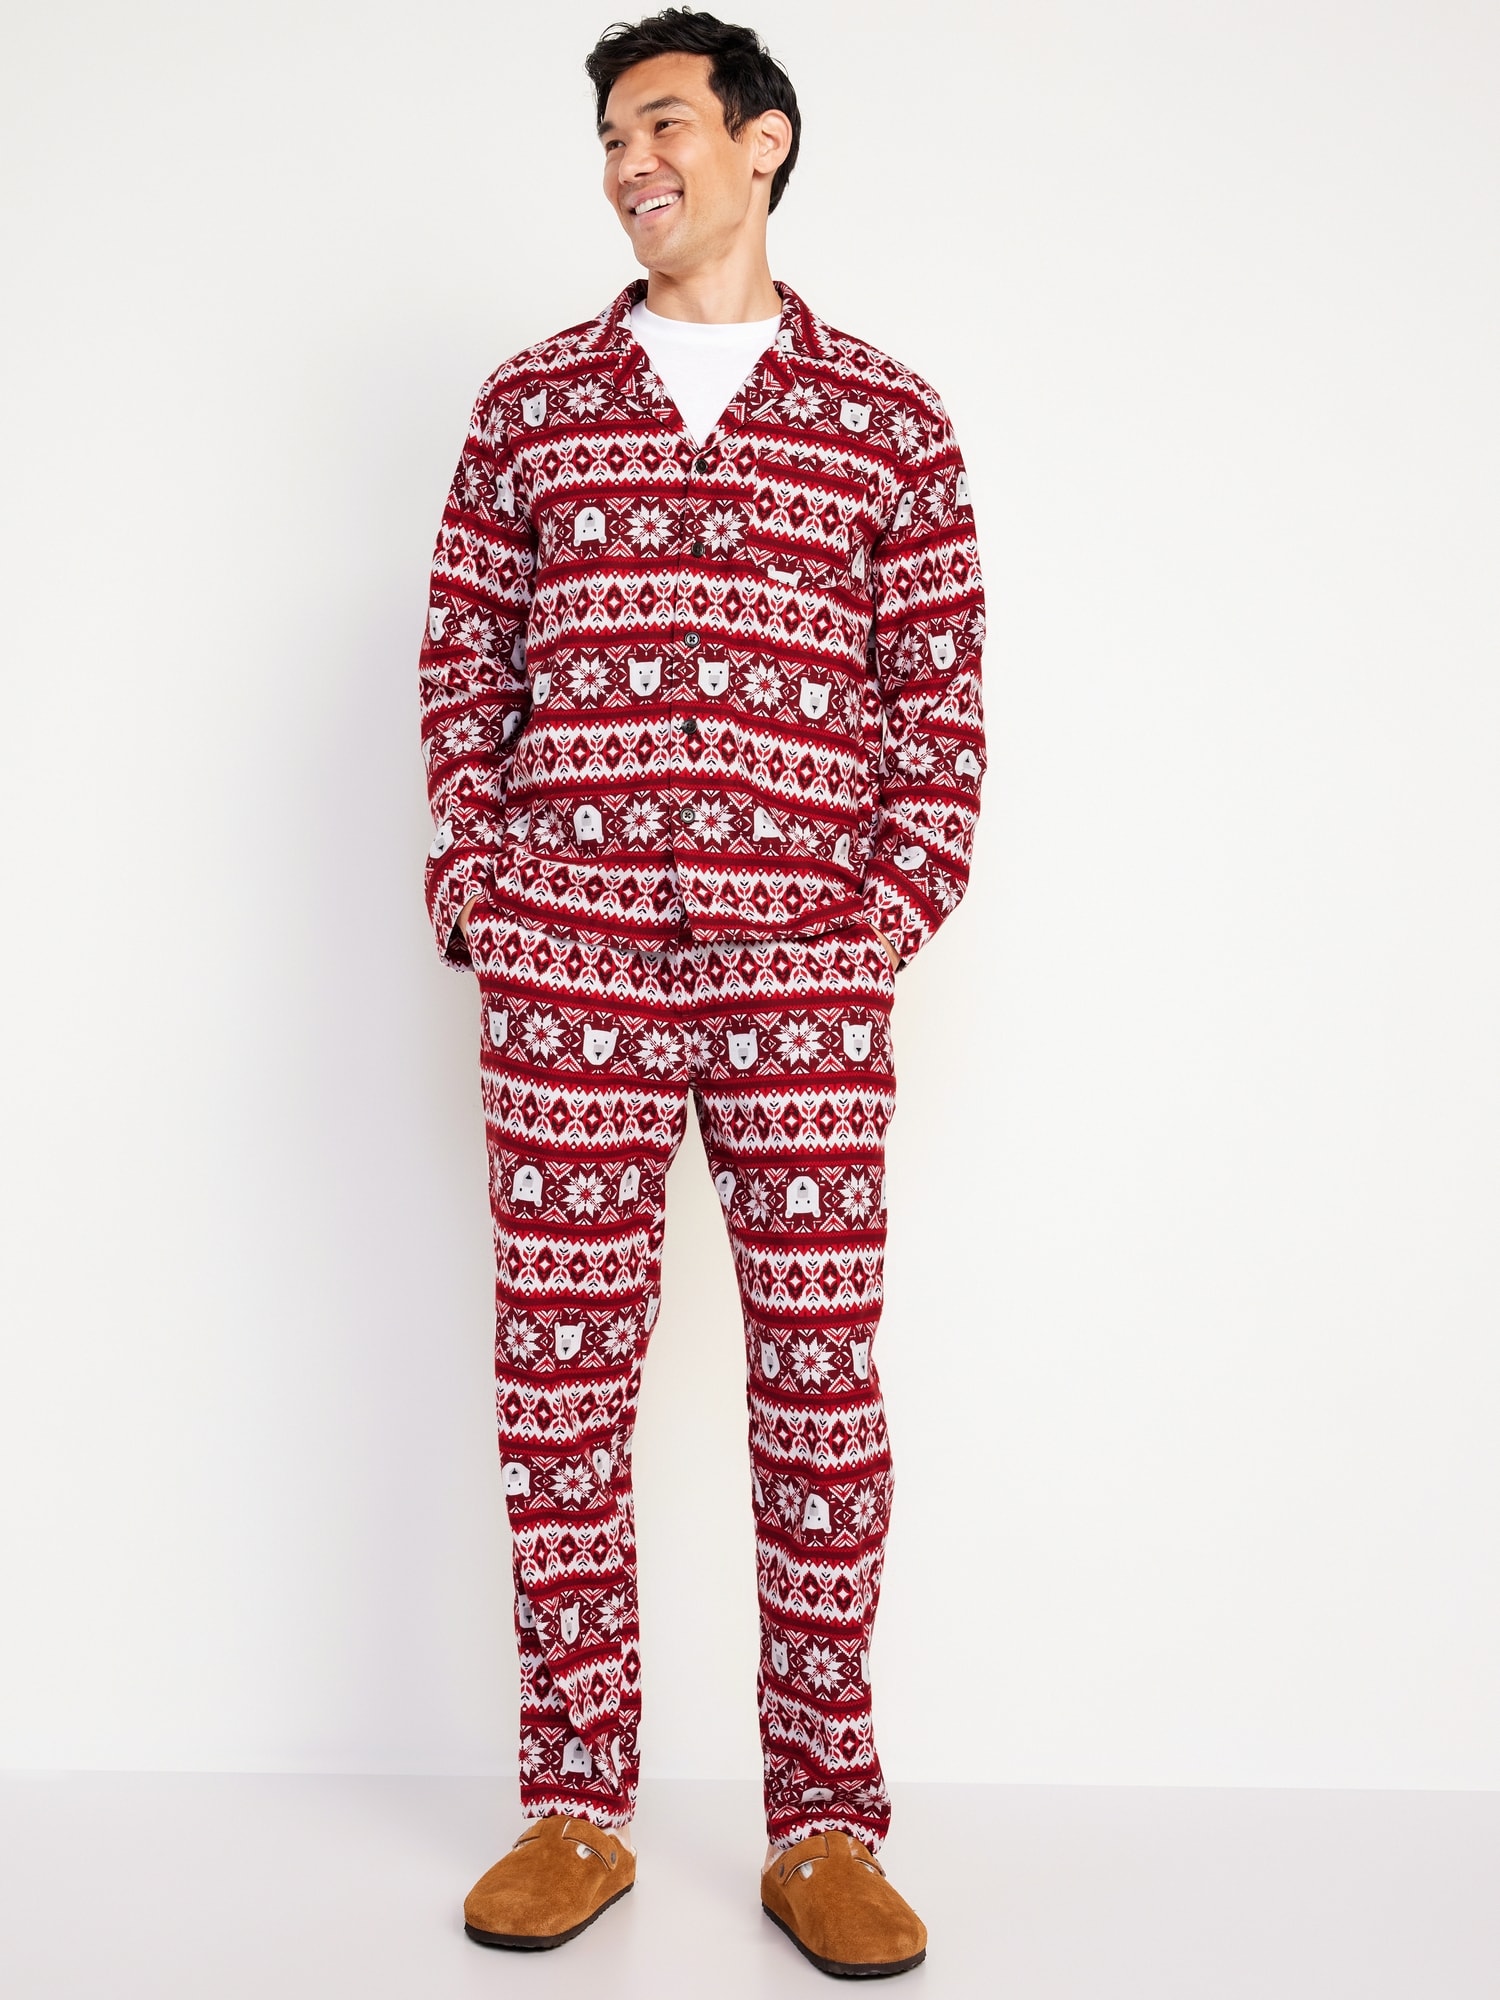 Matching Plaid Flannel Pajama Set